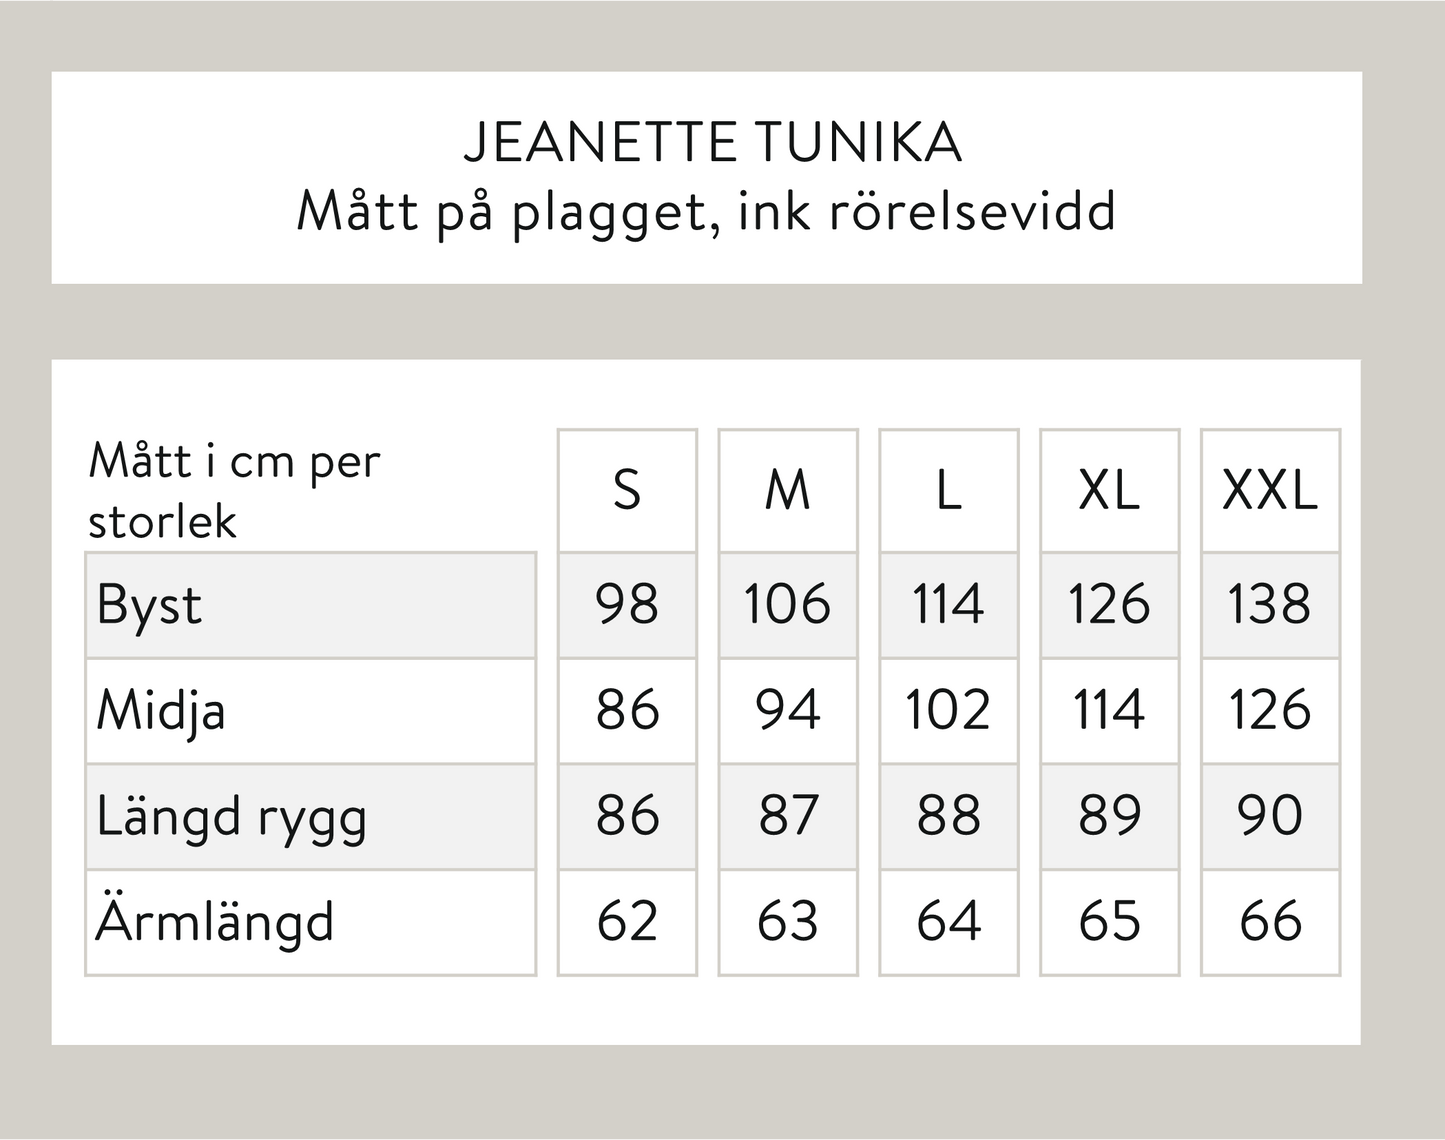 Jeanette tunika - monivärinen